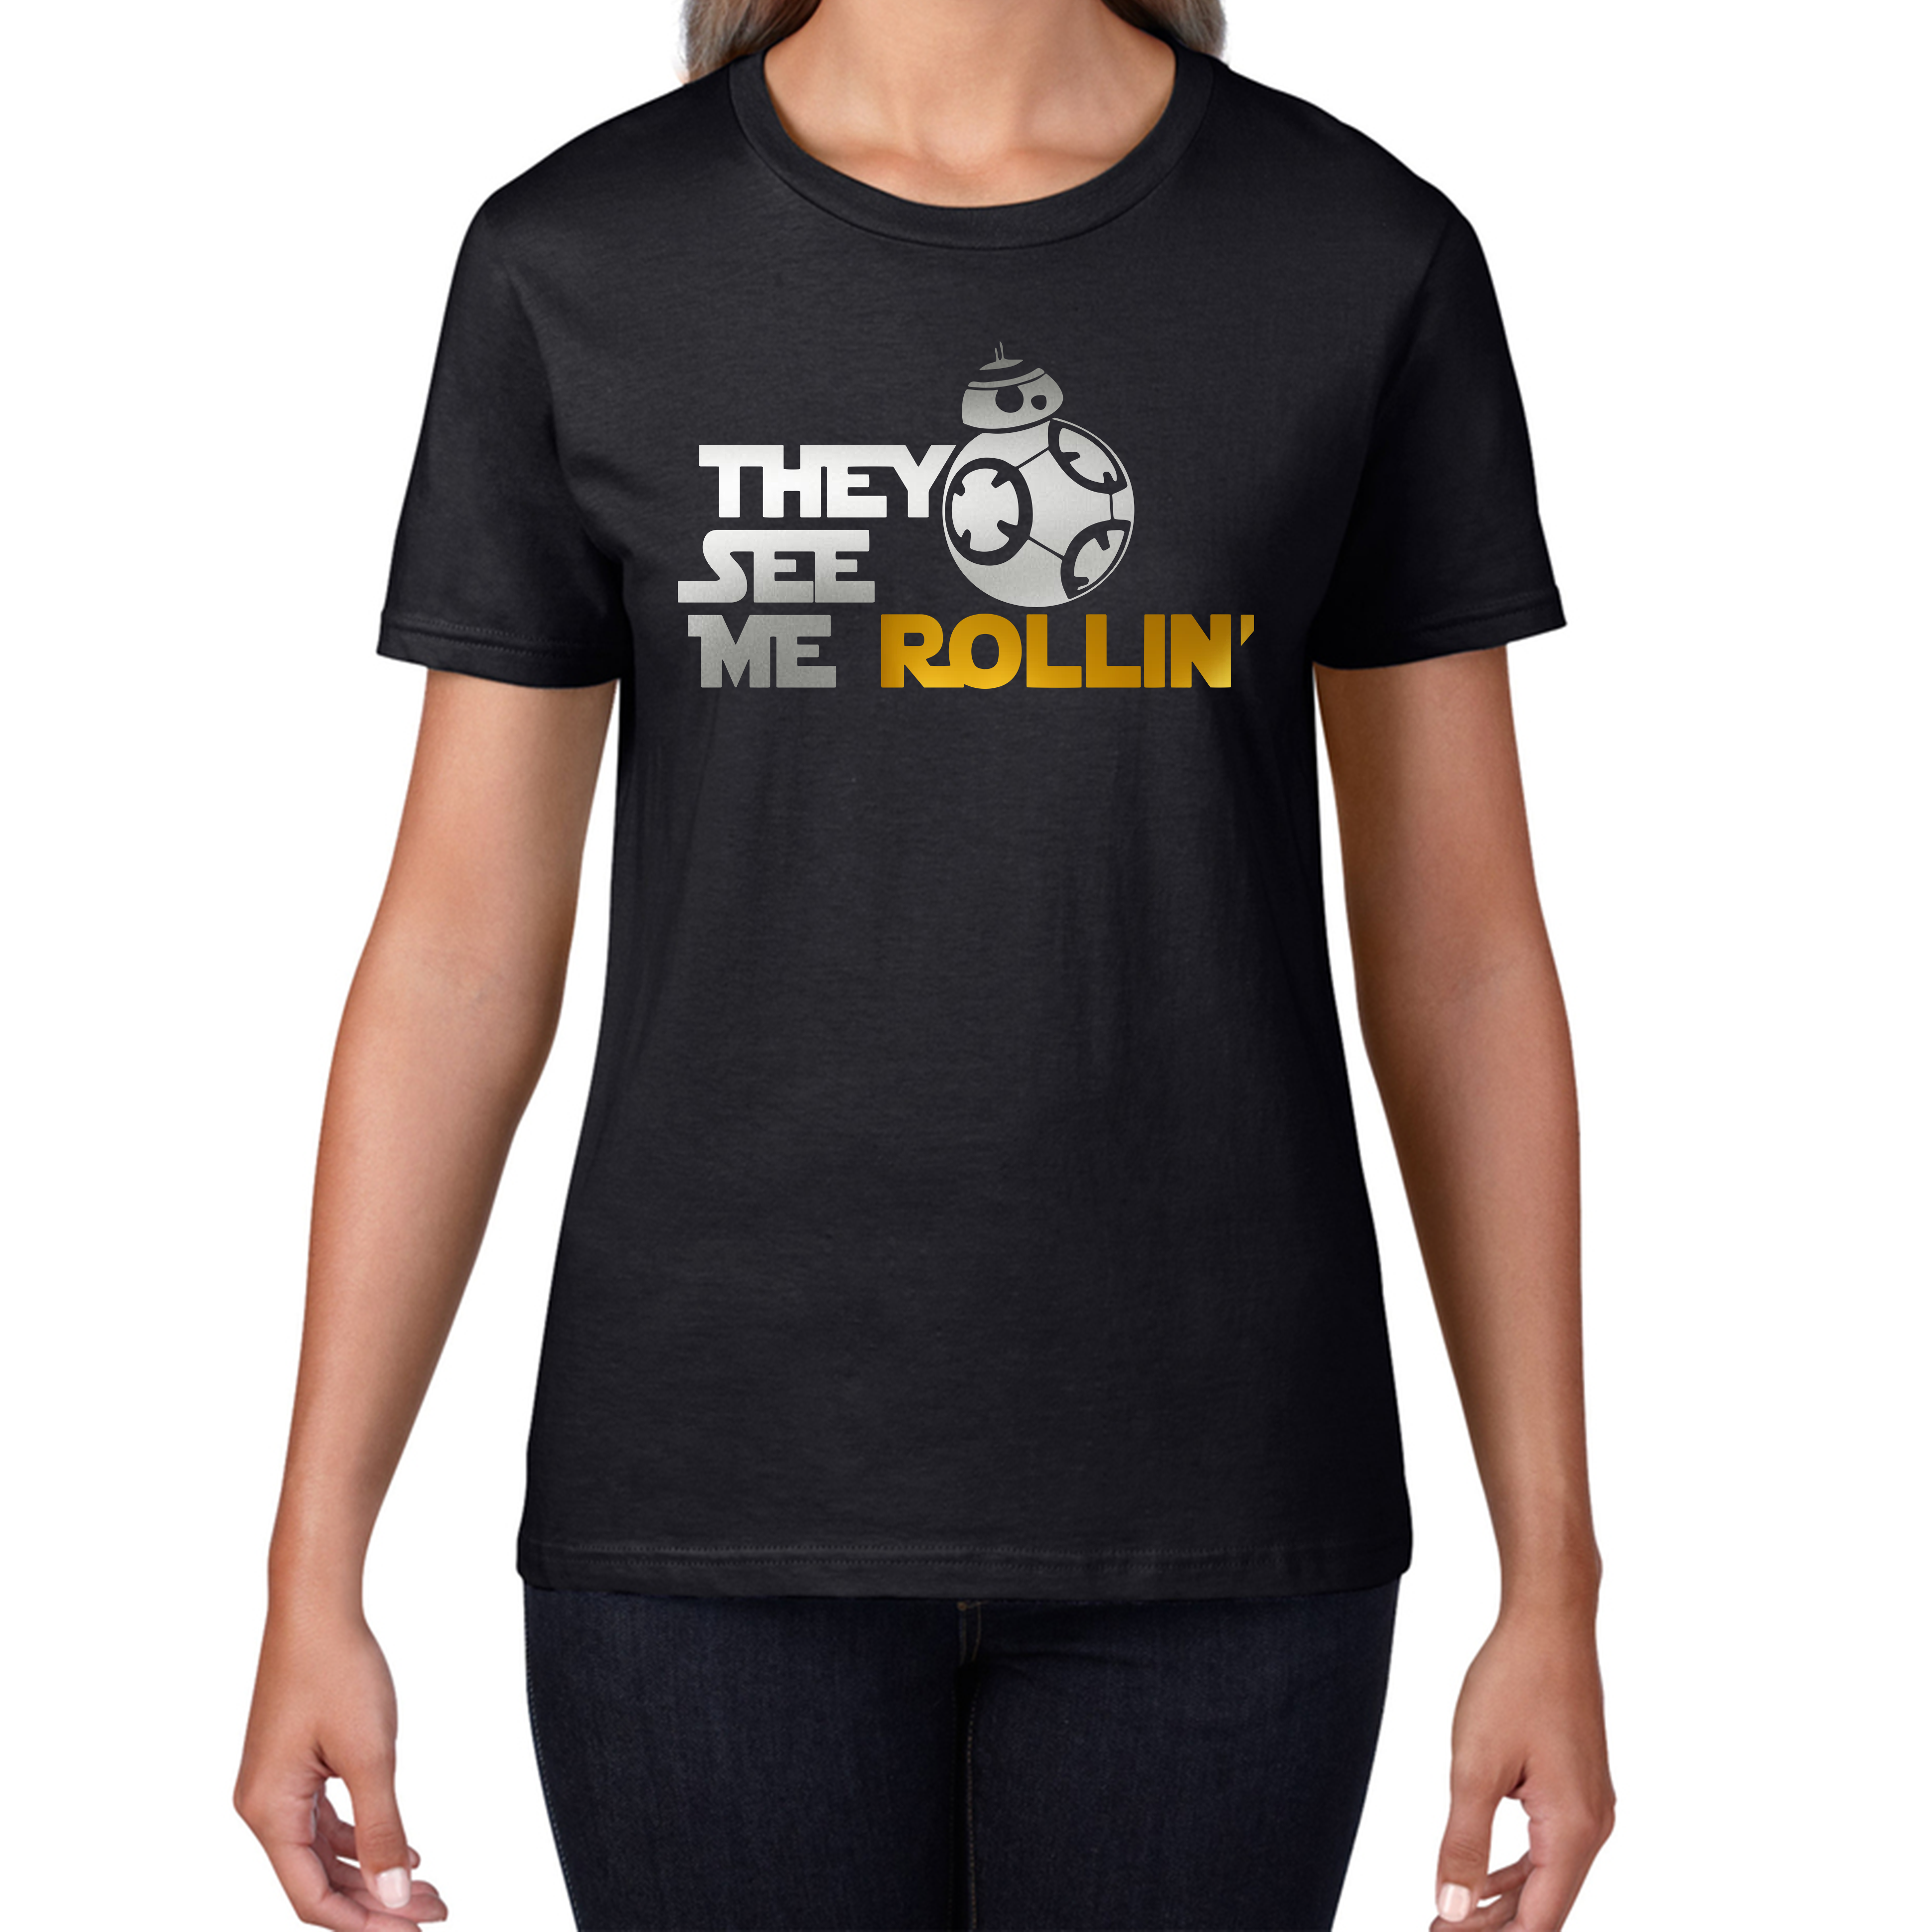 They See Me Rollin' BB-8 Star Wars Inspired T-Shirt Disney Star Wars Hollywood Studios Galaxy's Edge Womens Tee Top